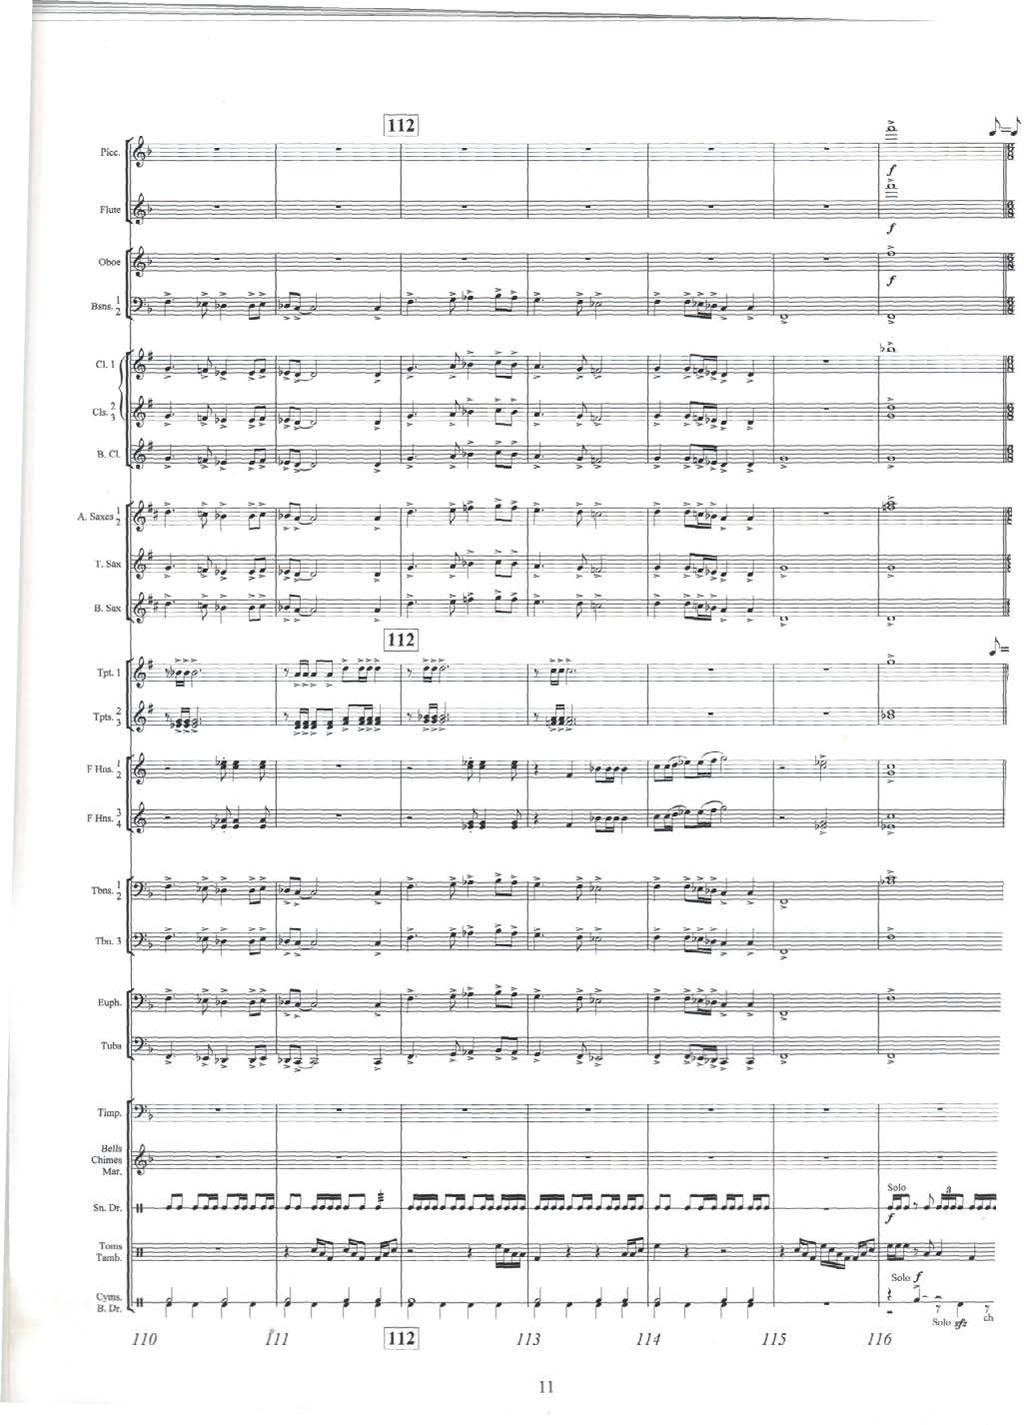 Flute Oboe & Cl. 1 P B.C1. Ig A. Saxes. T. Sax Tpts.: j=< fl FHns - Tbns., Tbn.